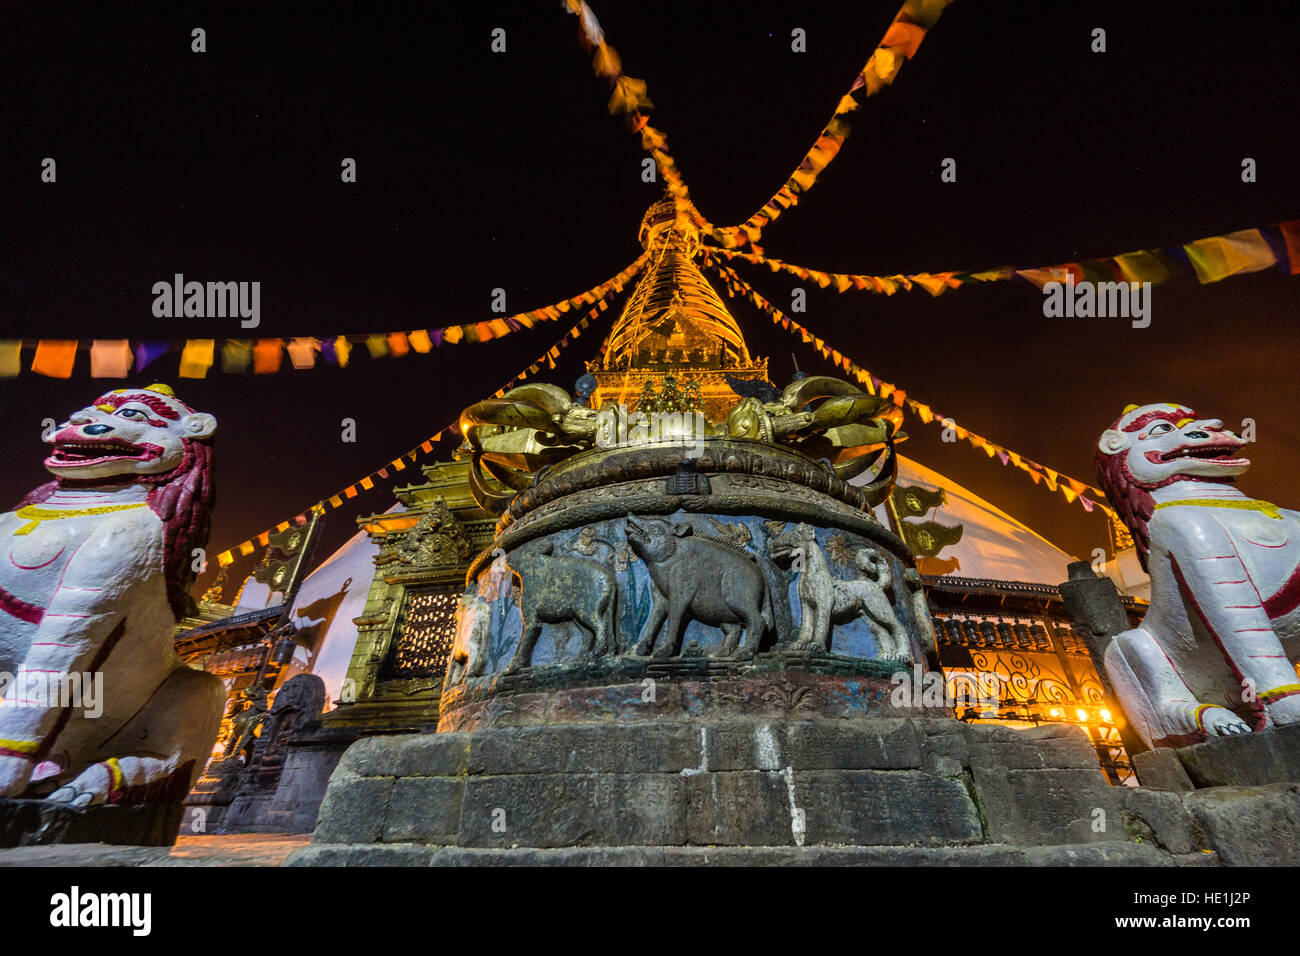 The white stupa of Swayambhunath temple, Monkey Temple, is decorated with tibetan prayer flags and illuminated at night Stock Photo